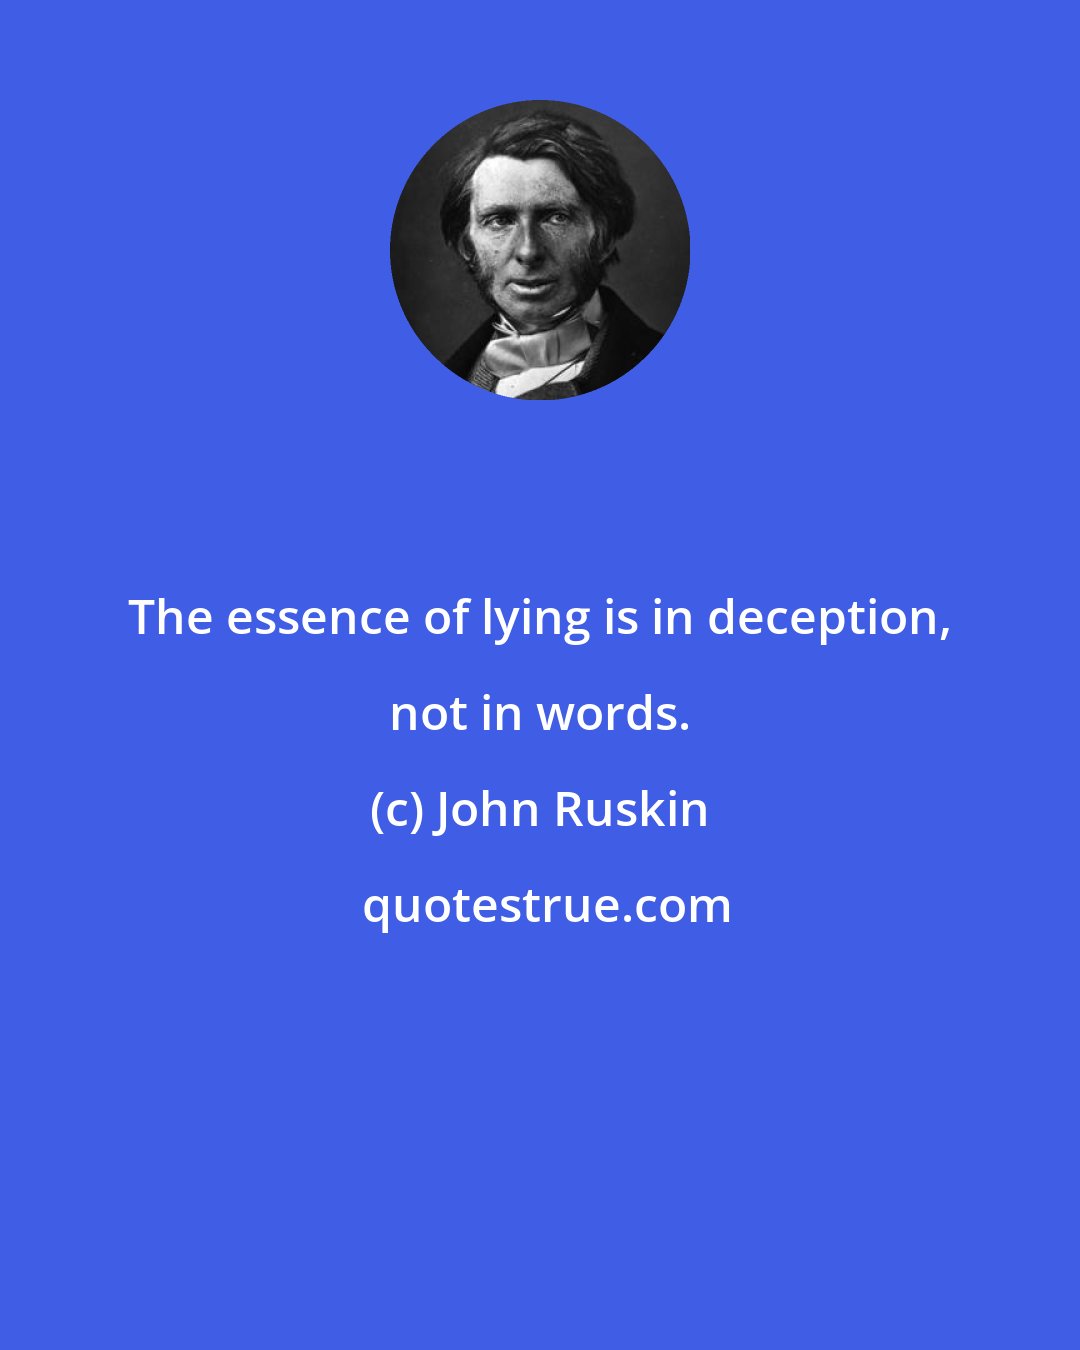 John Ruskin: The essence of lying is in deception, not in words.